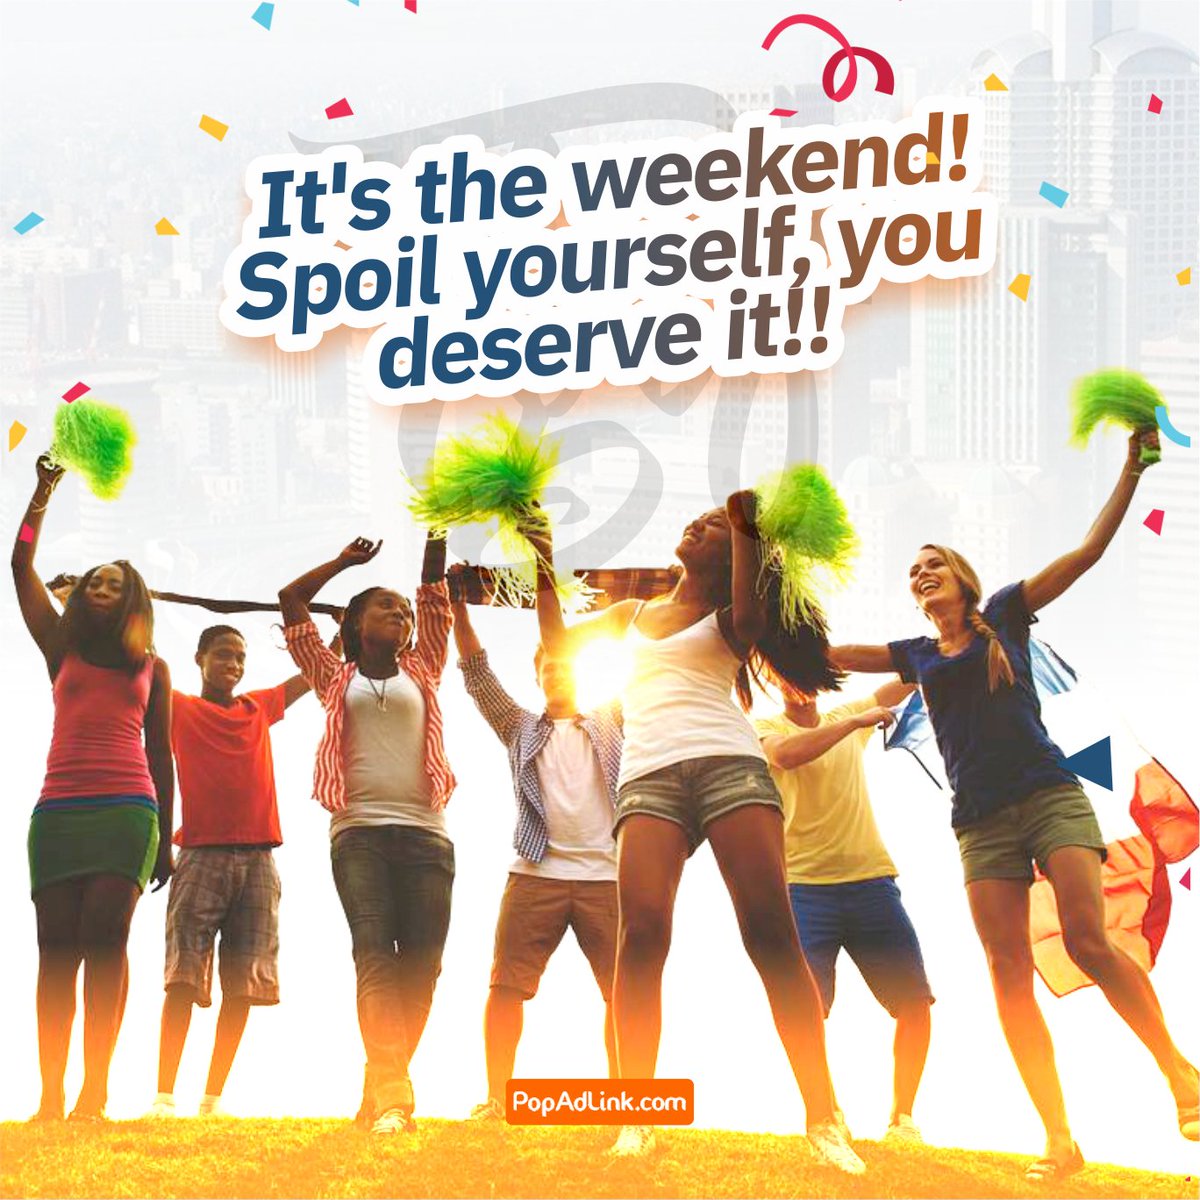 Maximize your weekend. Have fun

#tgif #corporatefun